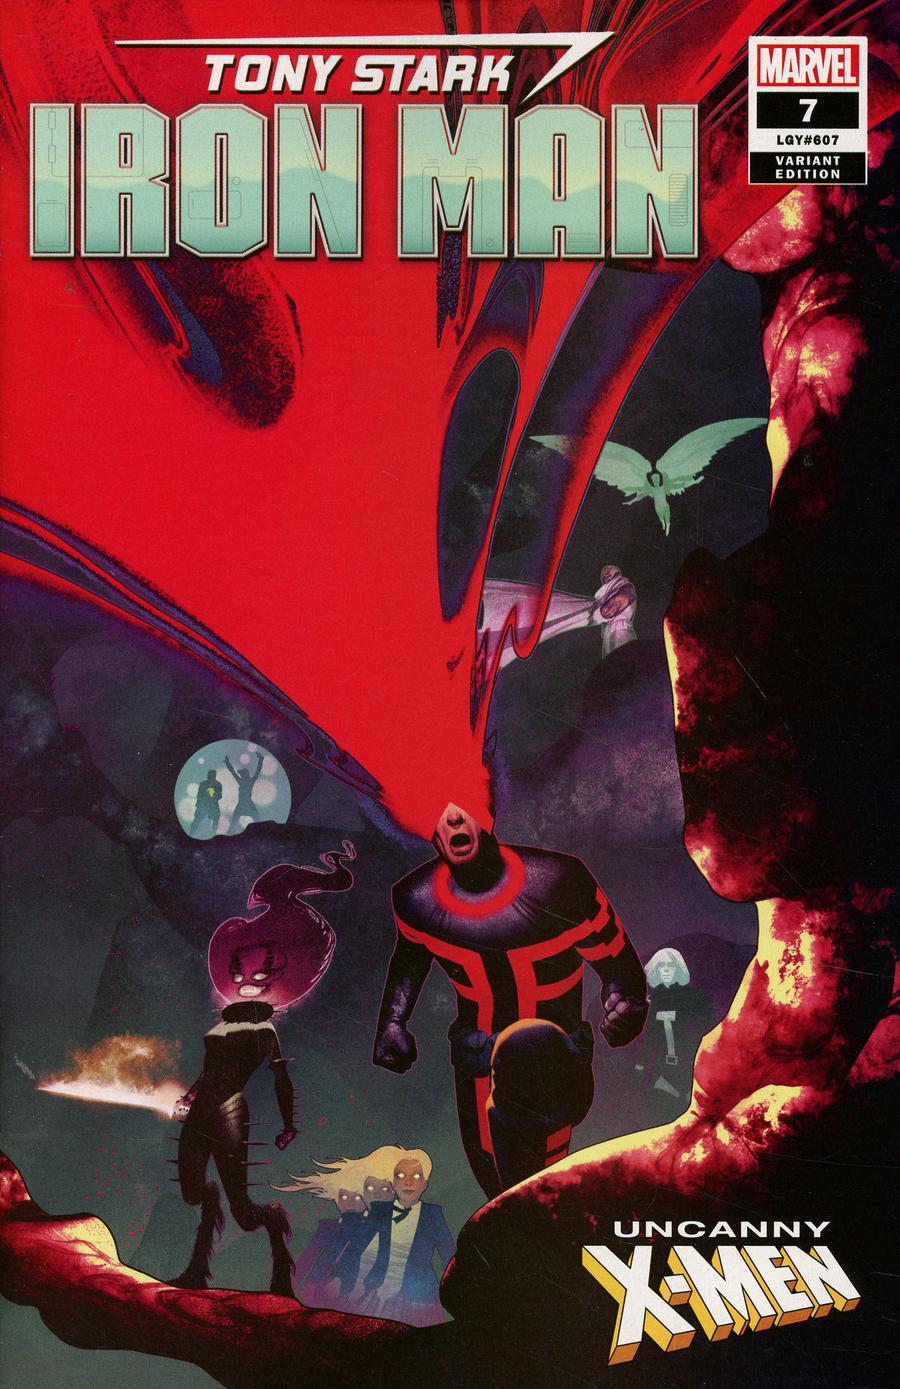 Tony Stark Iron Man #7 Cover B Variant Uncanny X-Men Cover